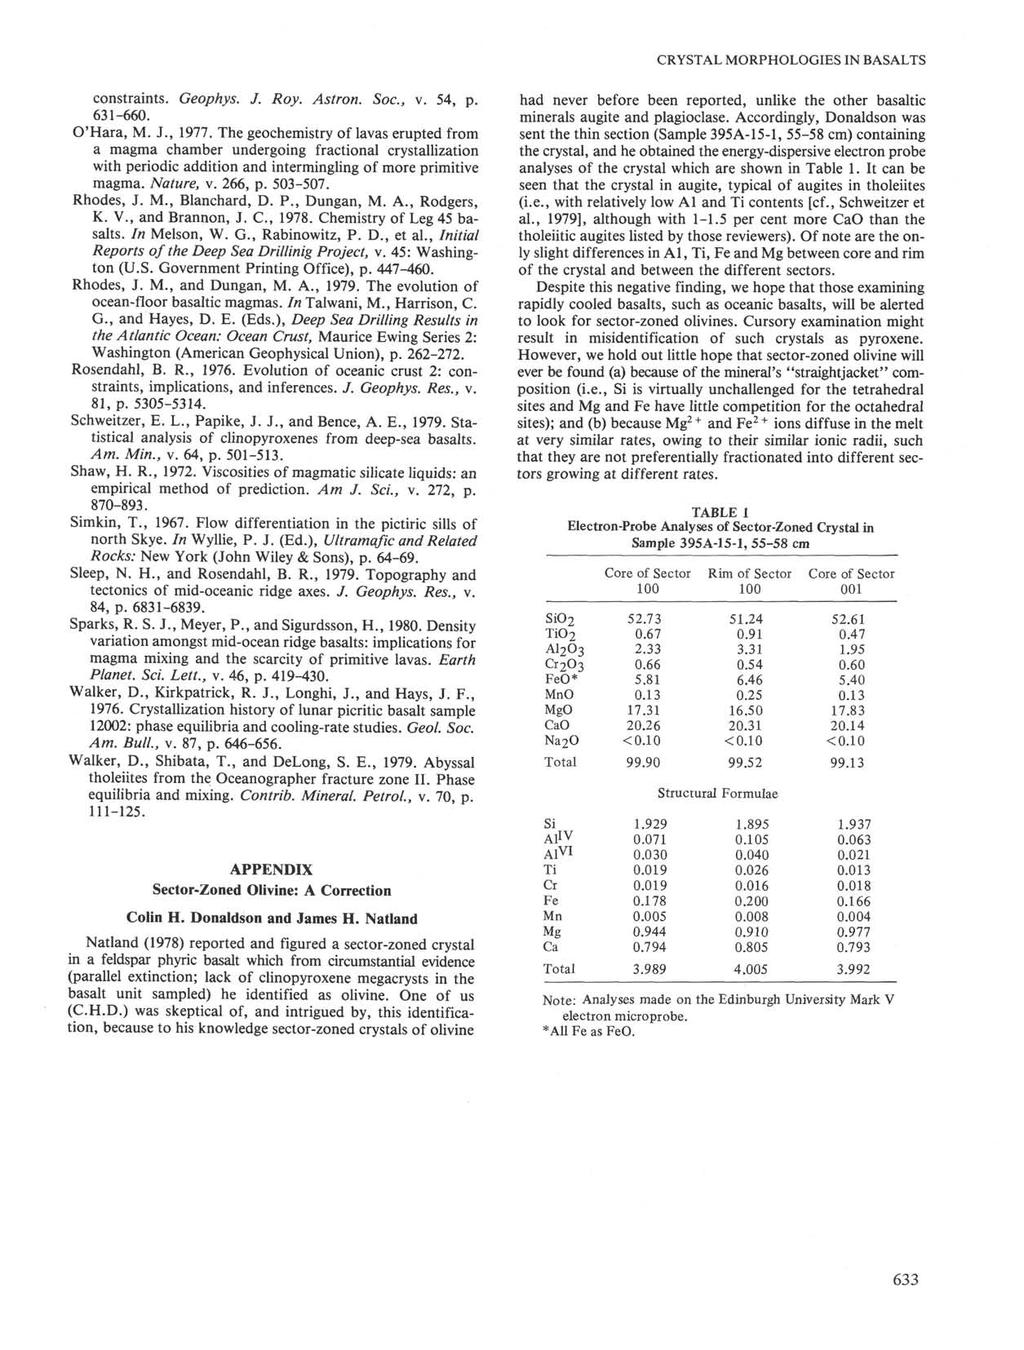 CRYSTAL MORPHOLOGIES IN BASALTS constraints. Geophys. J. Roy. Astron. Soc, v. 54, p. 631-660. O'Hara, M. J., 1977.